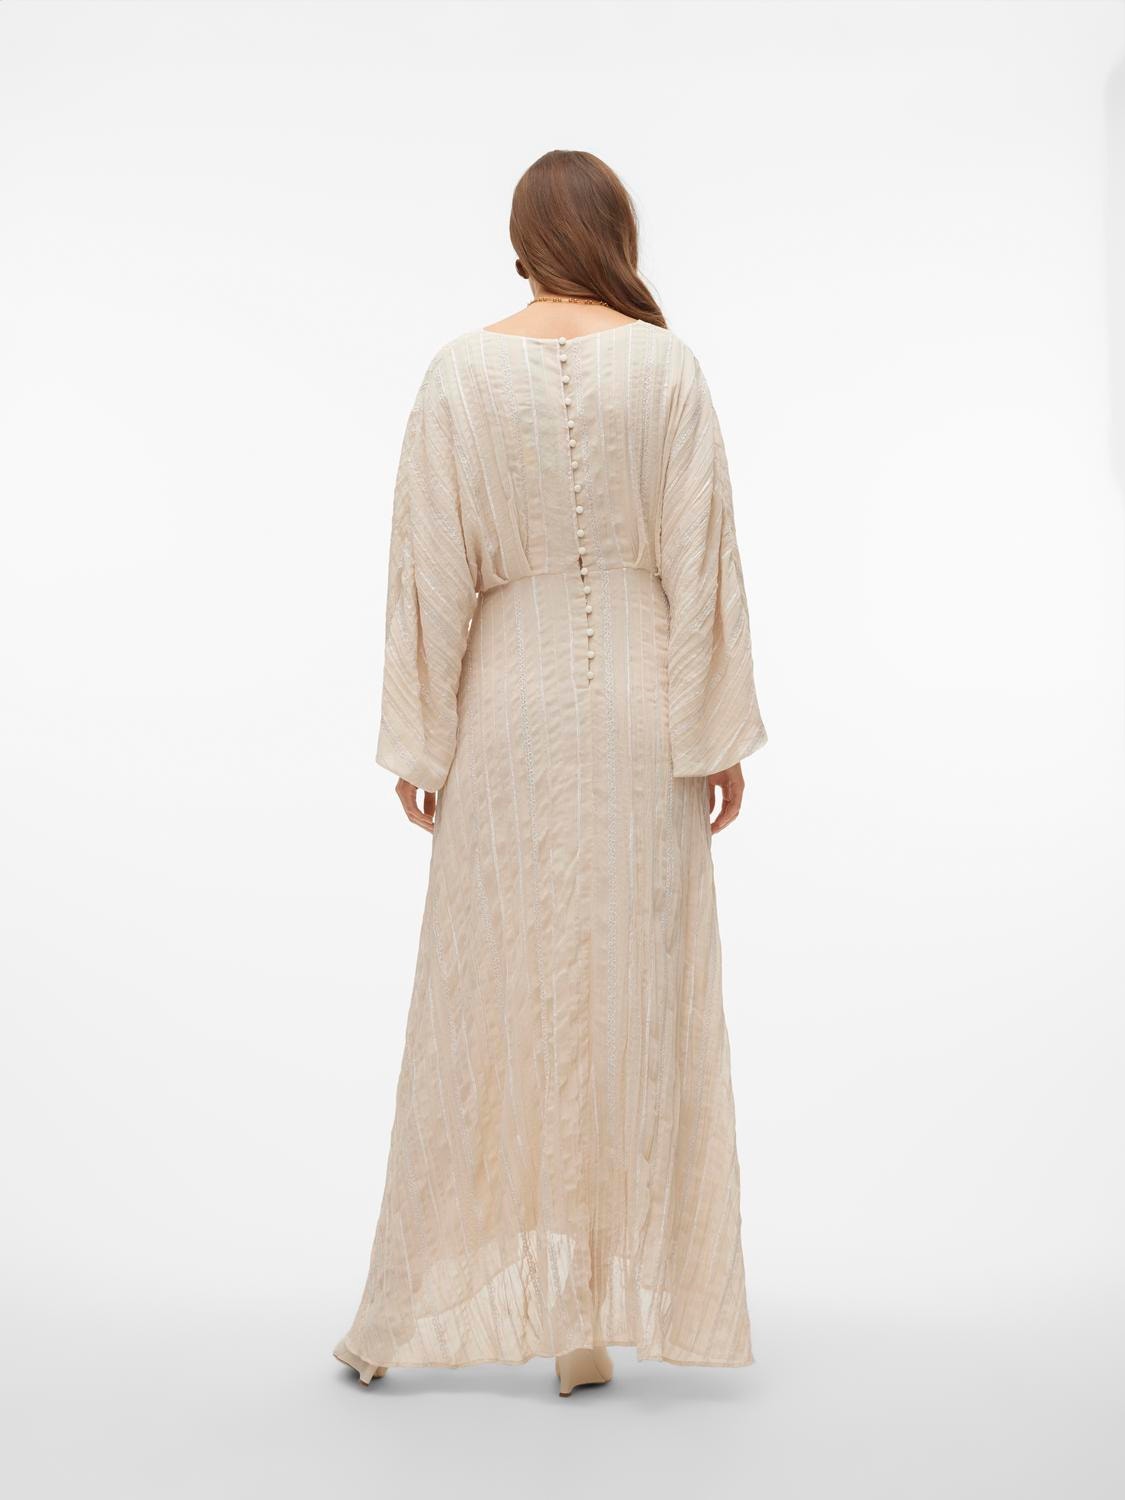 Vero Moda VMTARA Long dress -White Swan - 10304254